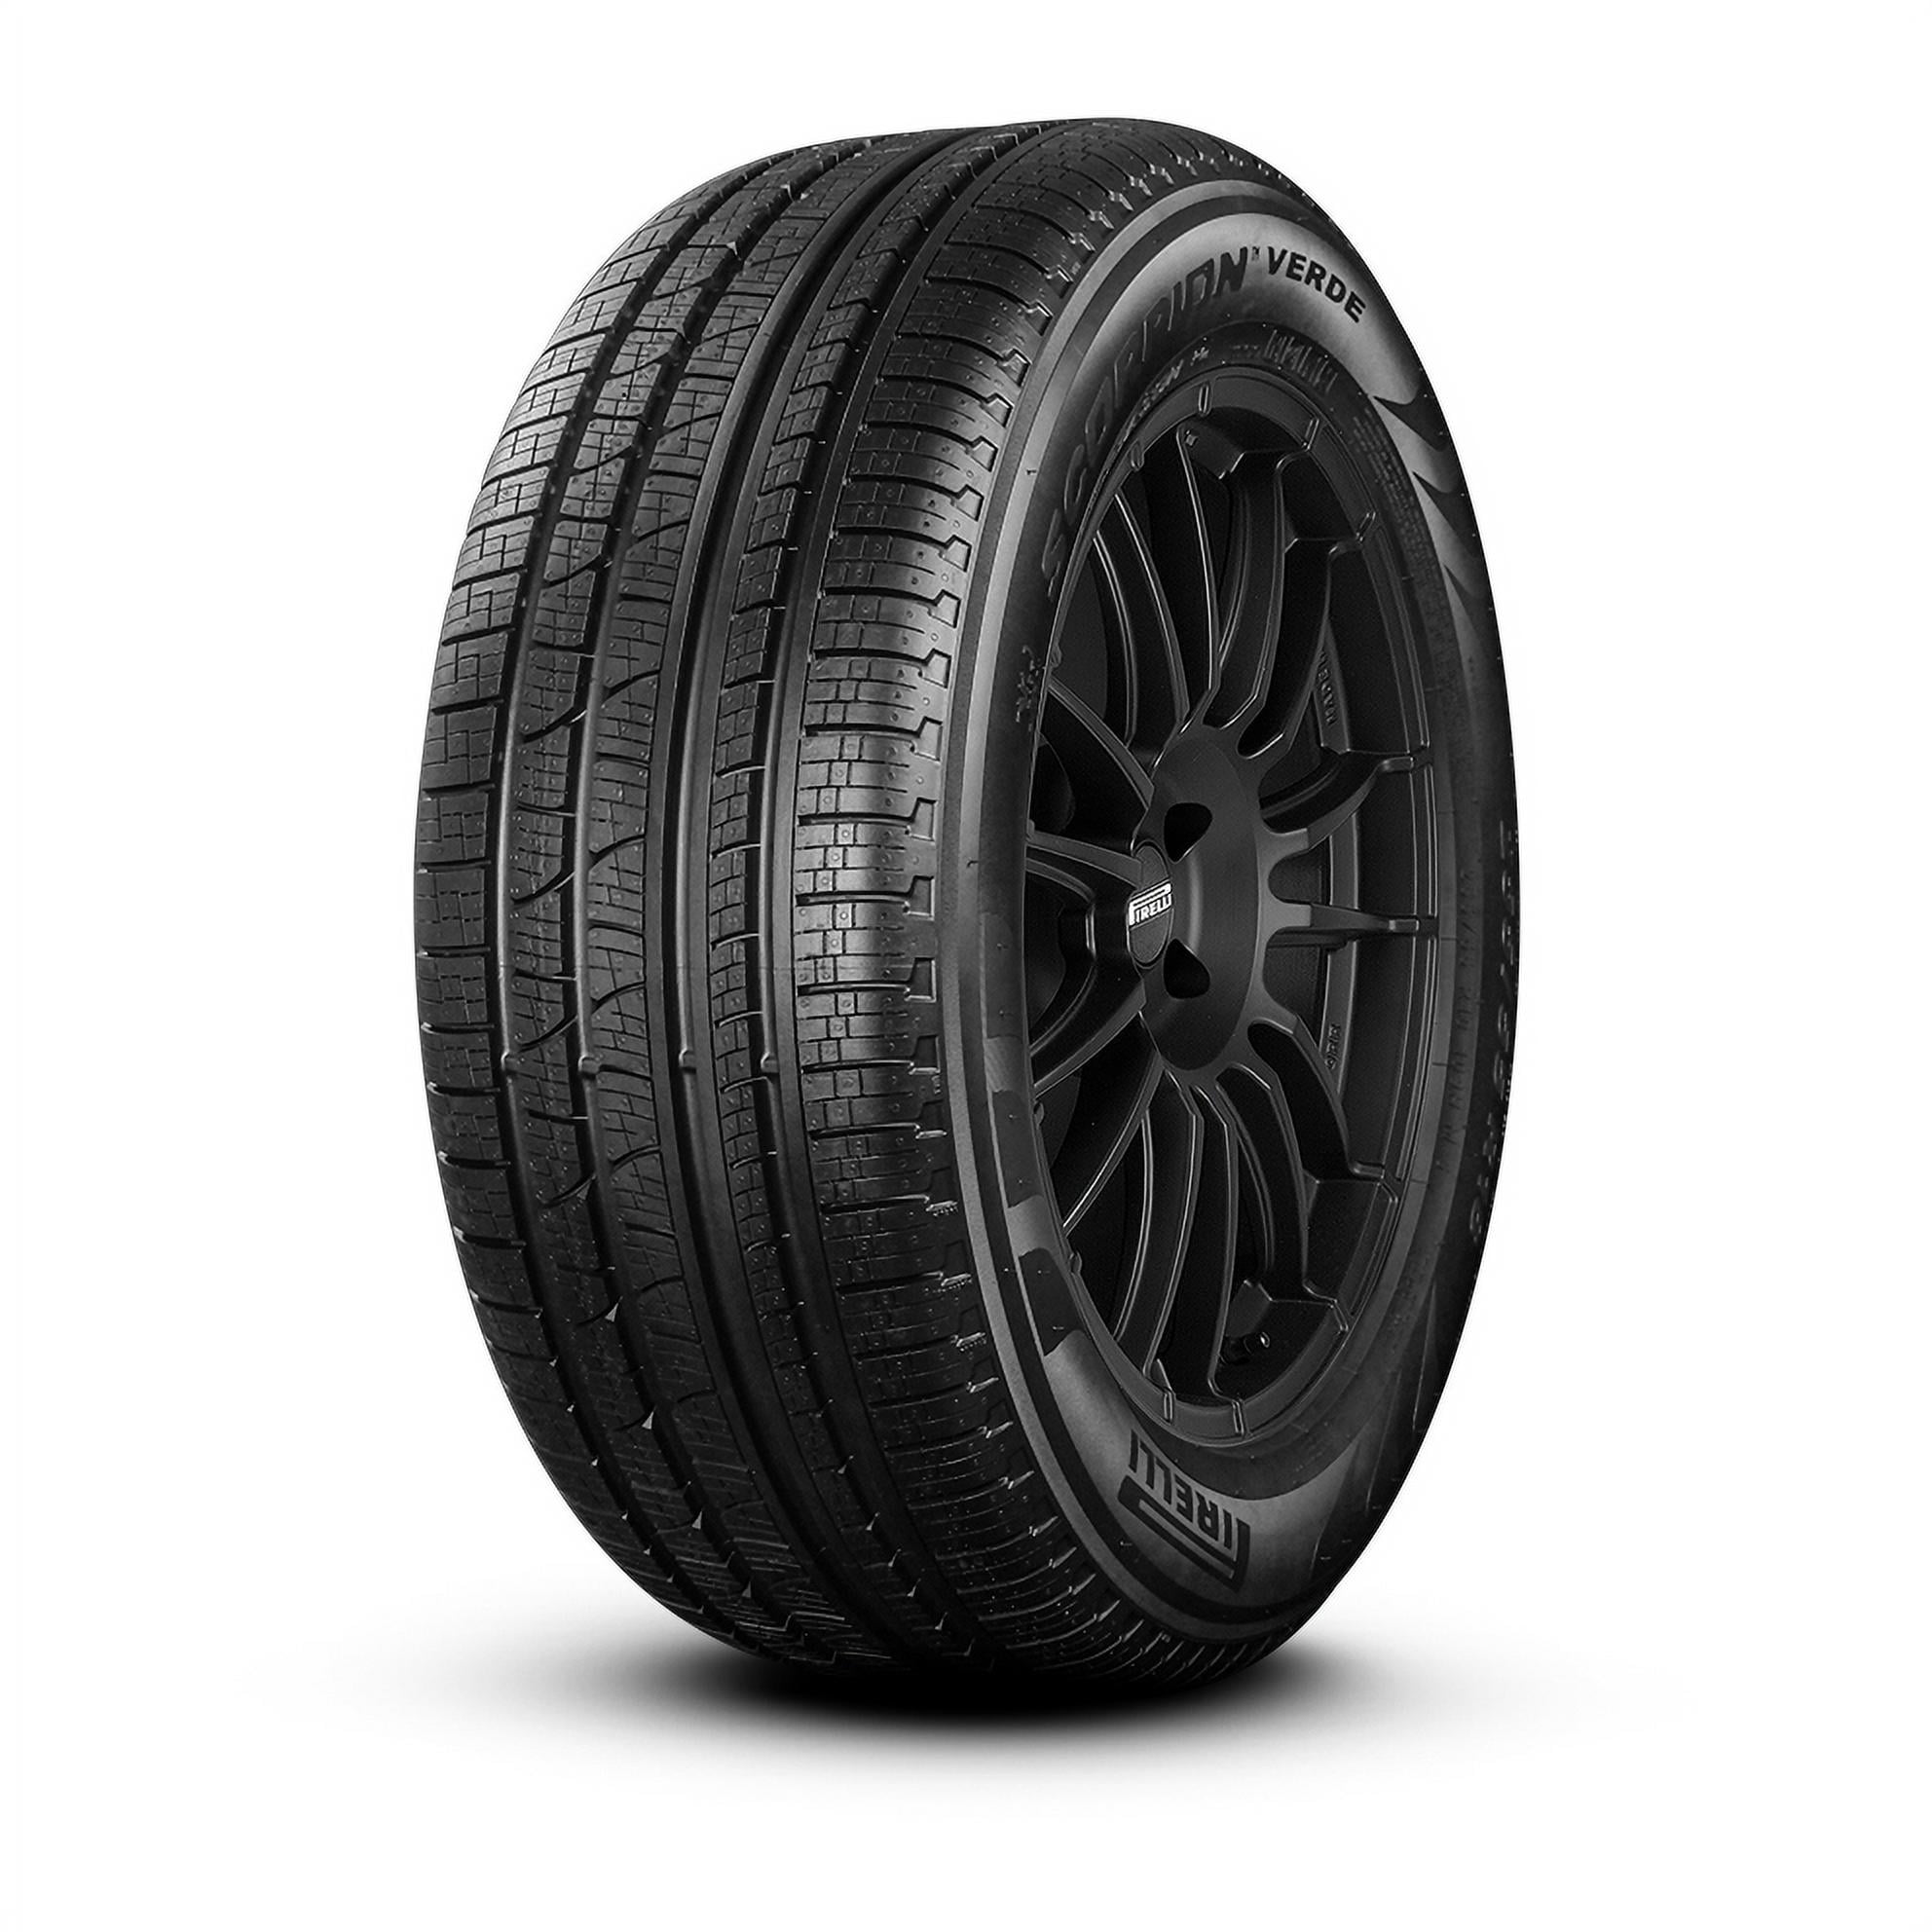 Pirelli Scorpion Verde All Season Plus 235/65R17 104 H Tire